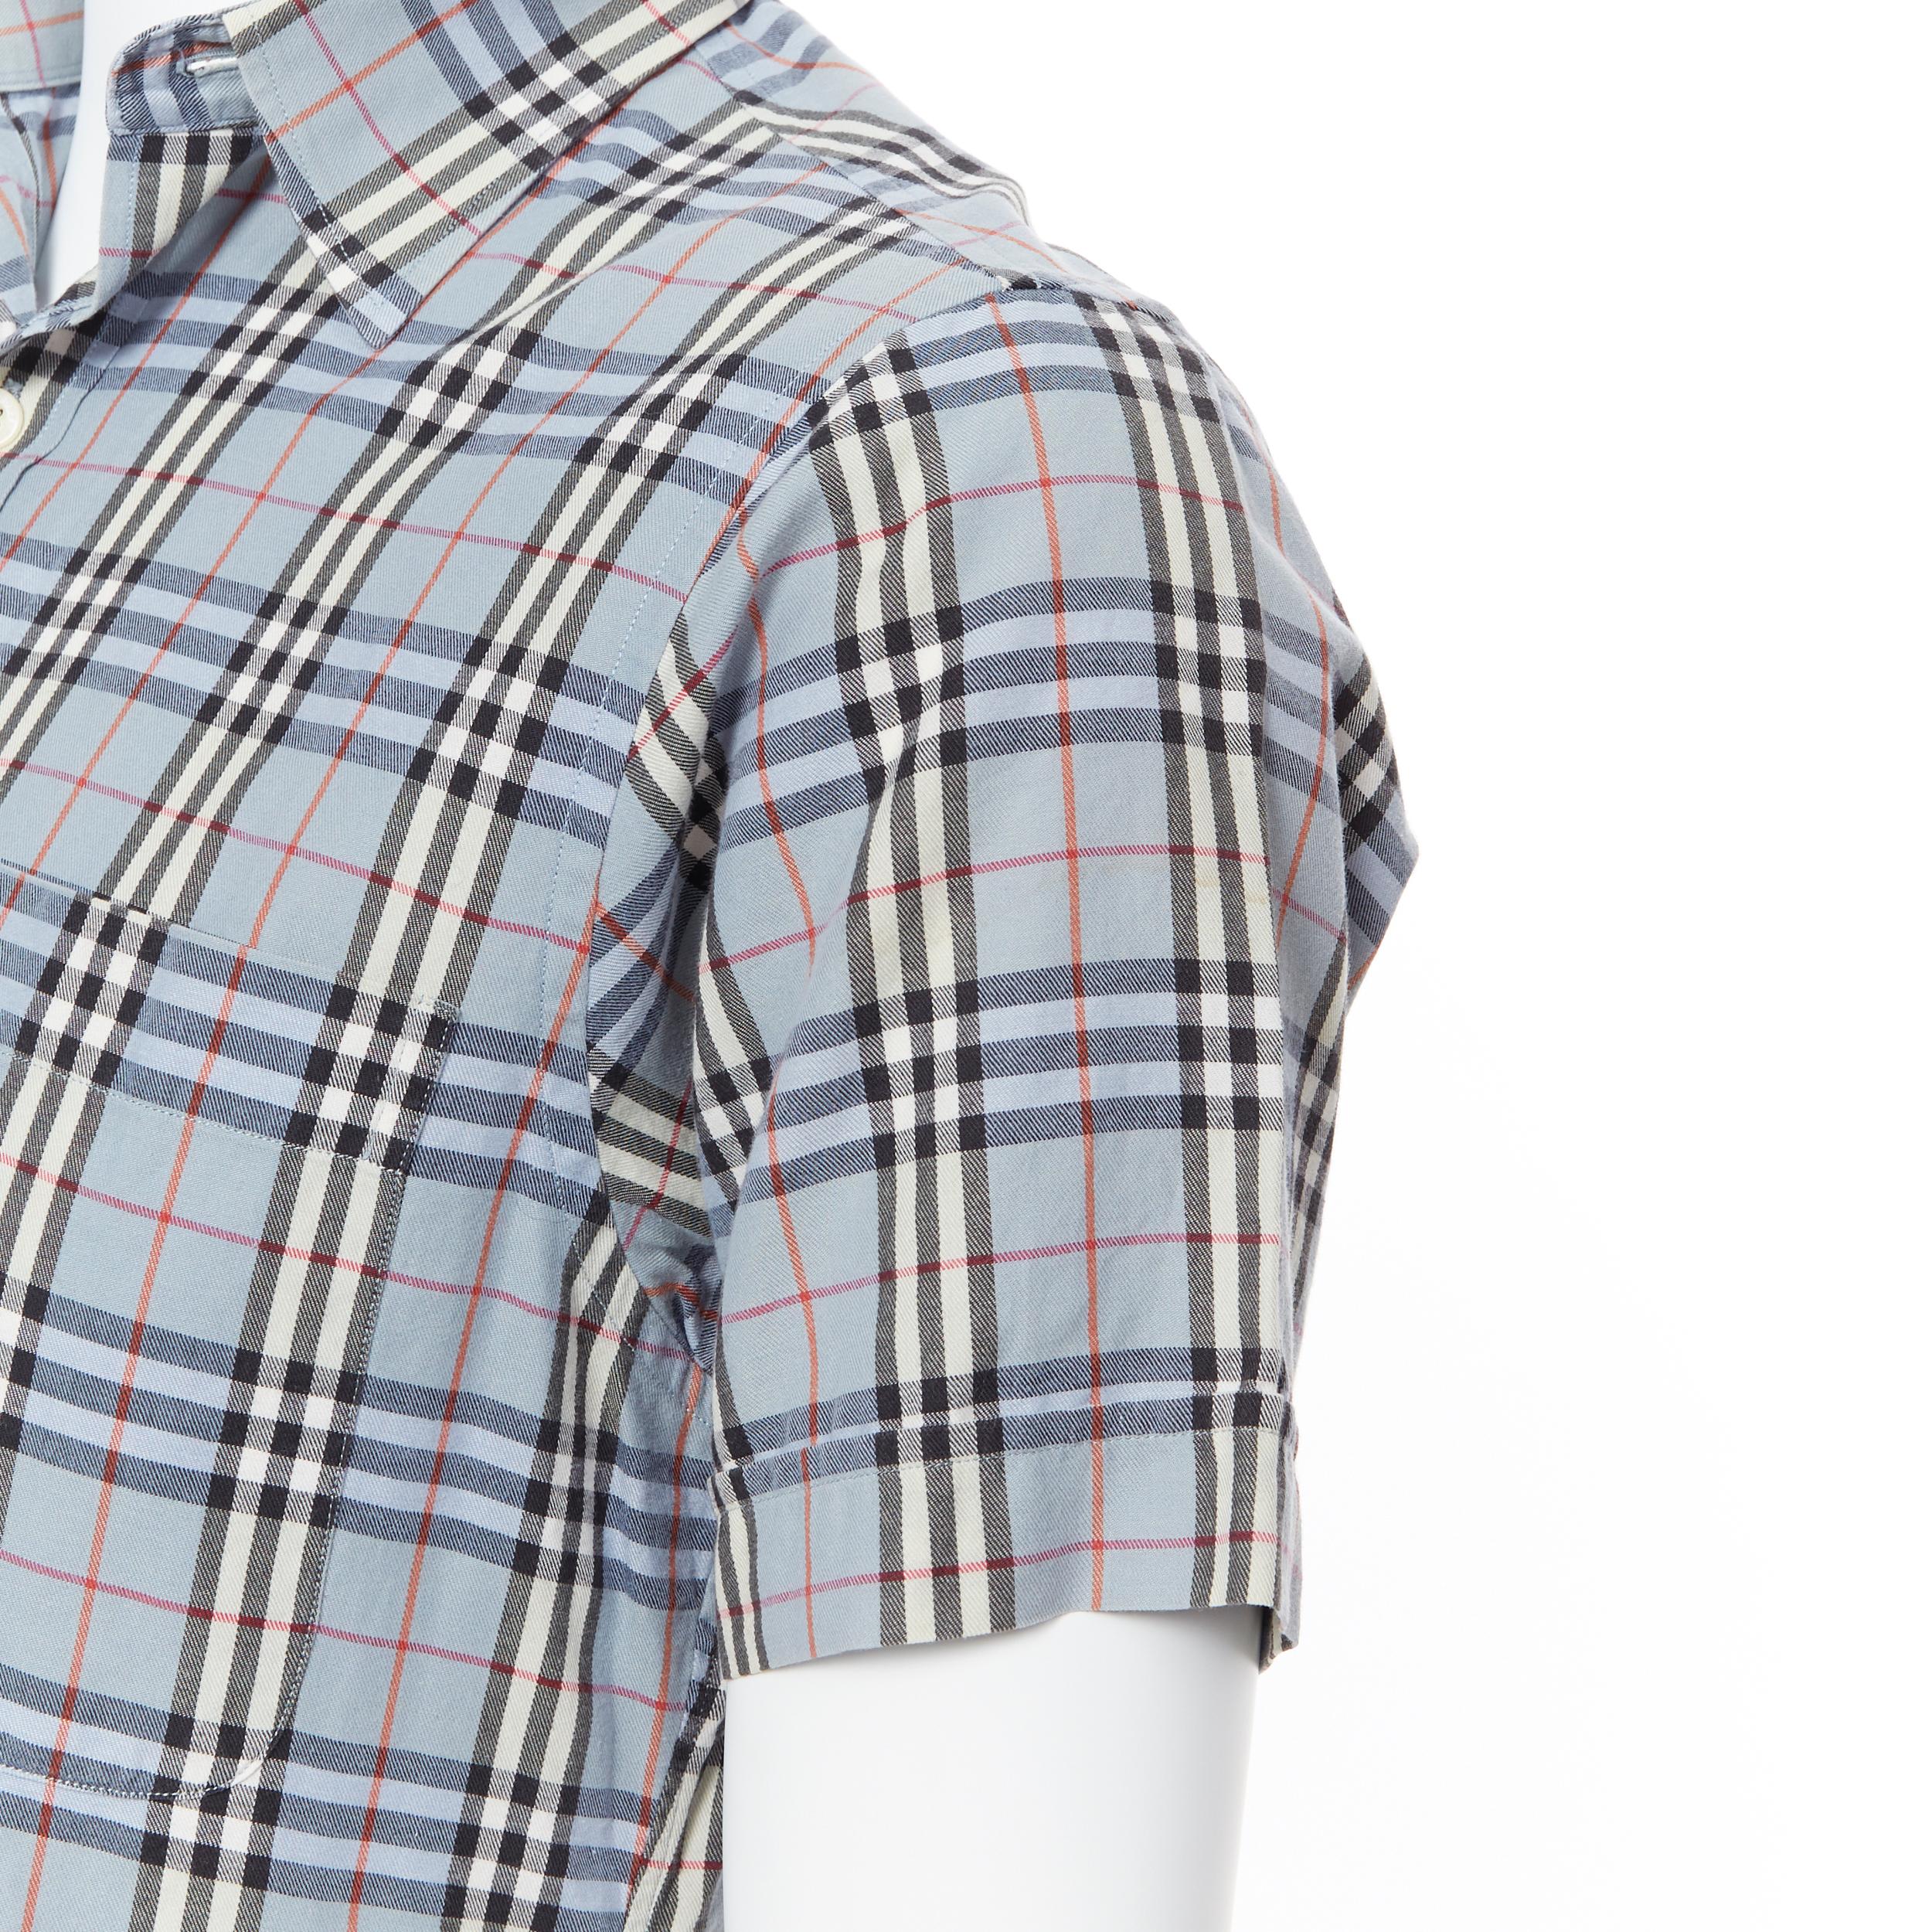 Men's BURBERRY House Check blue checkered cotton short sleeve casual shirt S